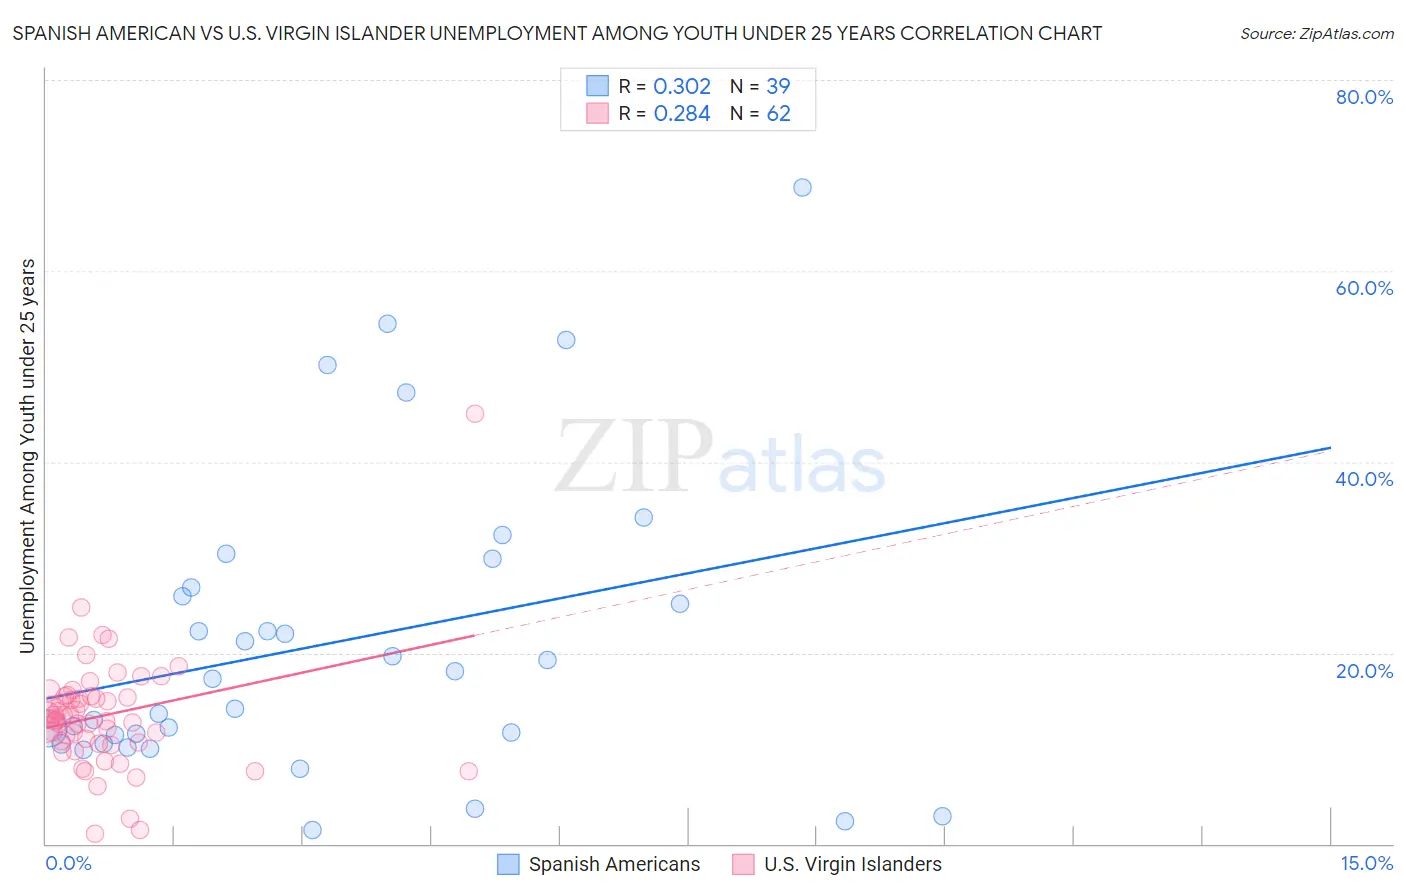 Spanish American vs U.S. Virgin Islander Unemployment Among Youth under 25 years